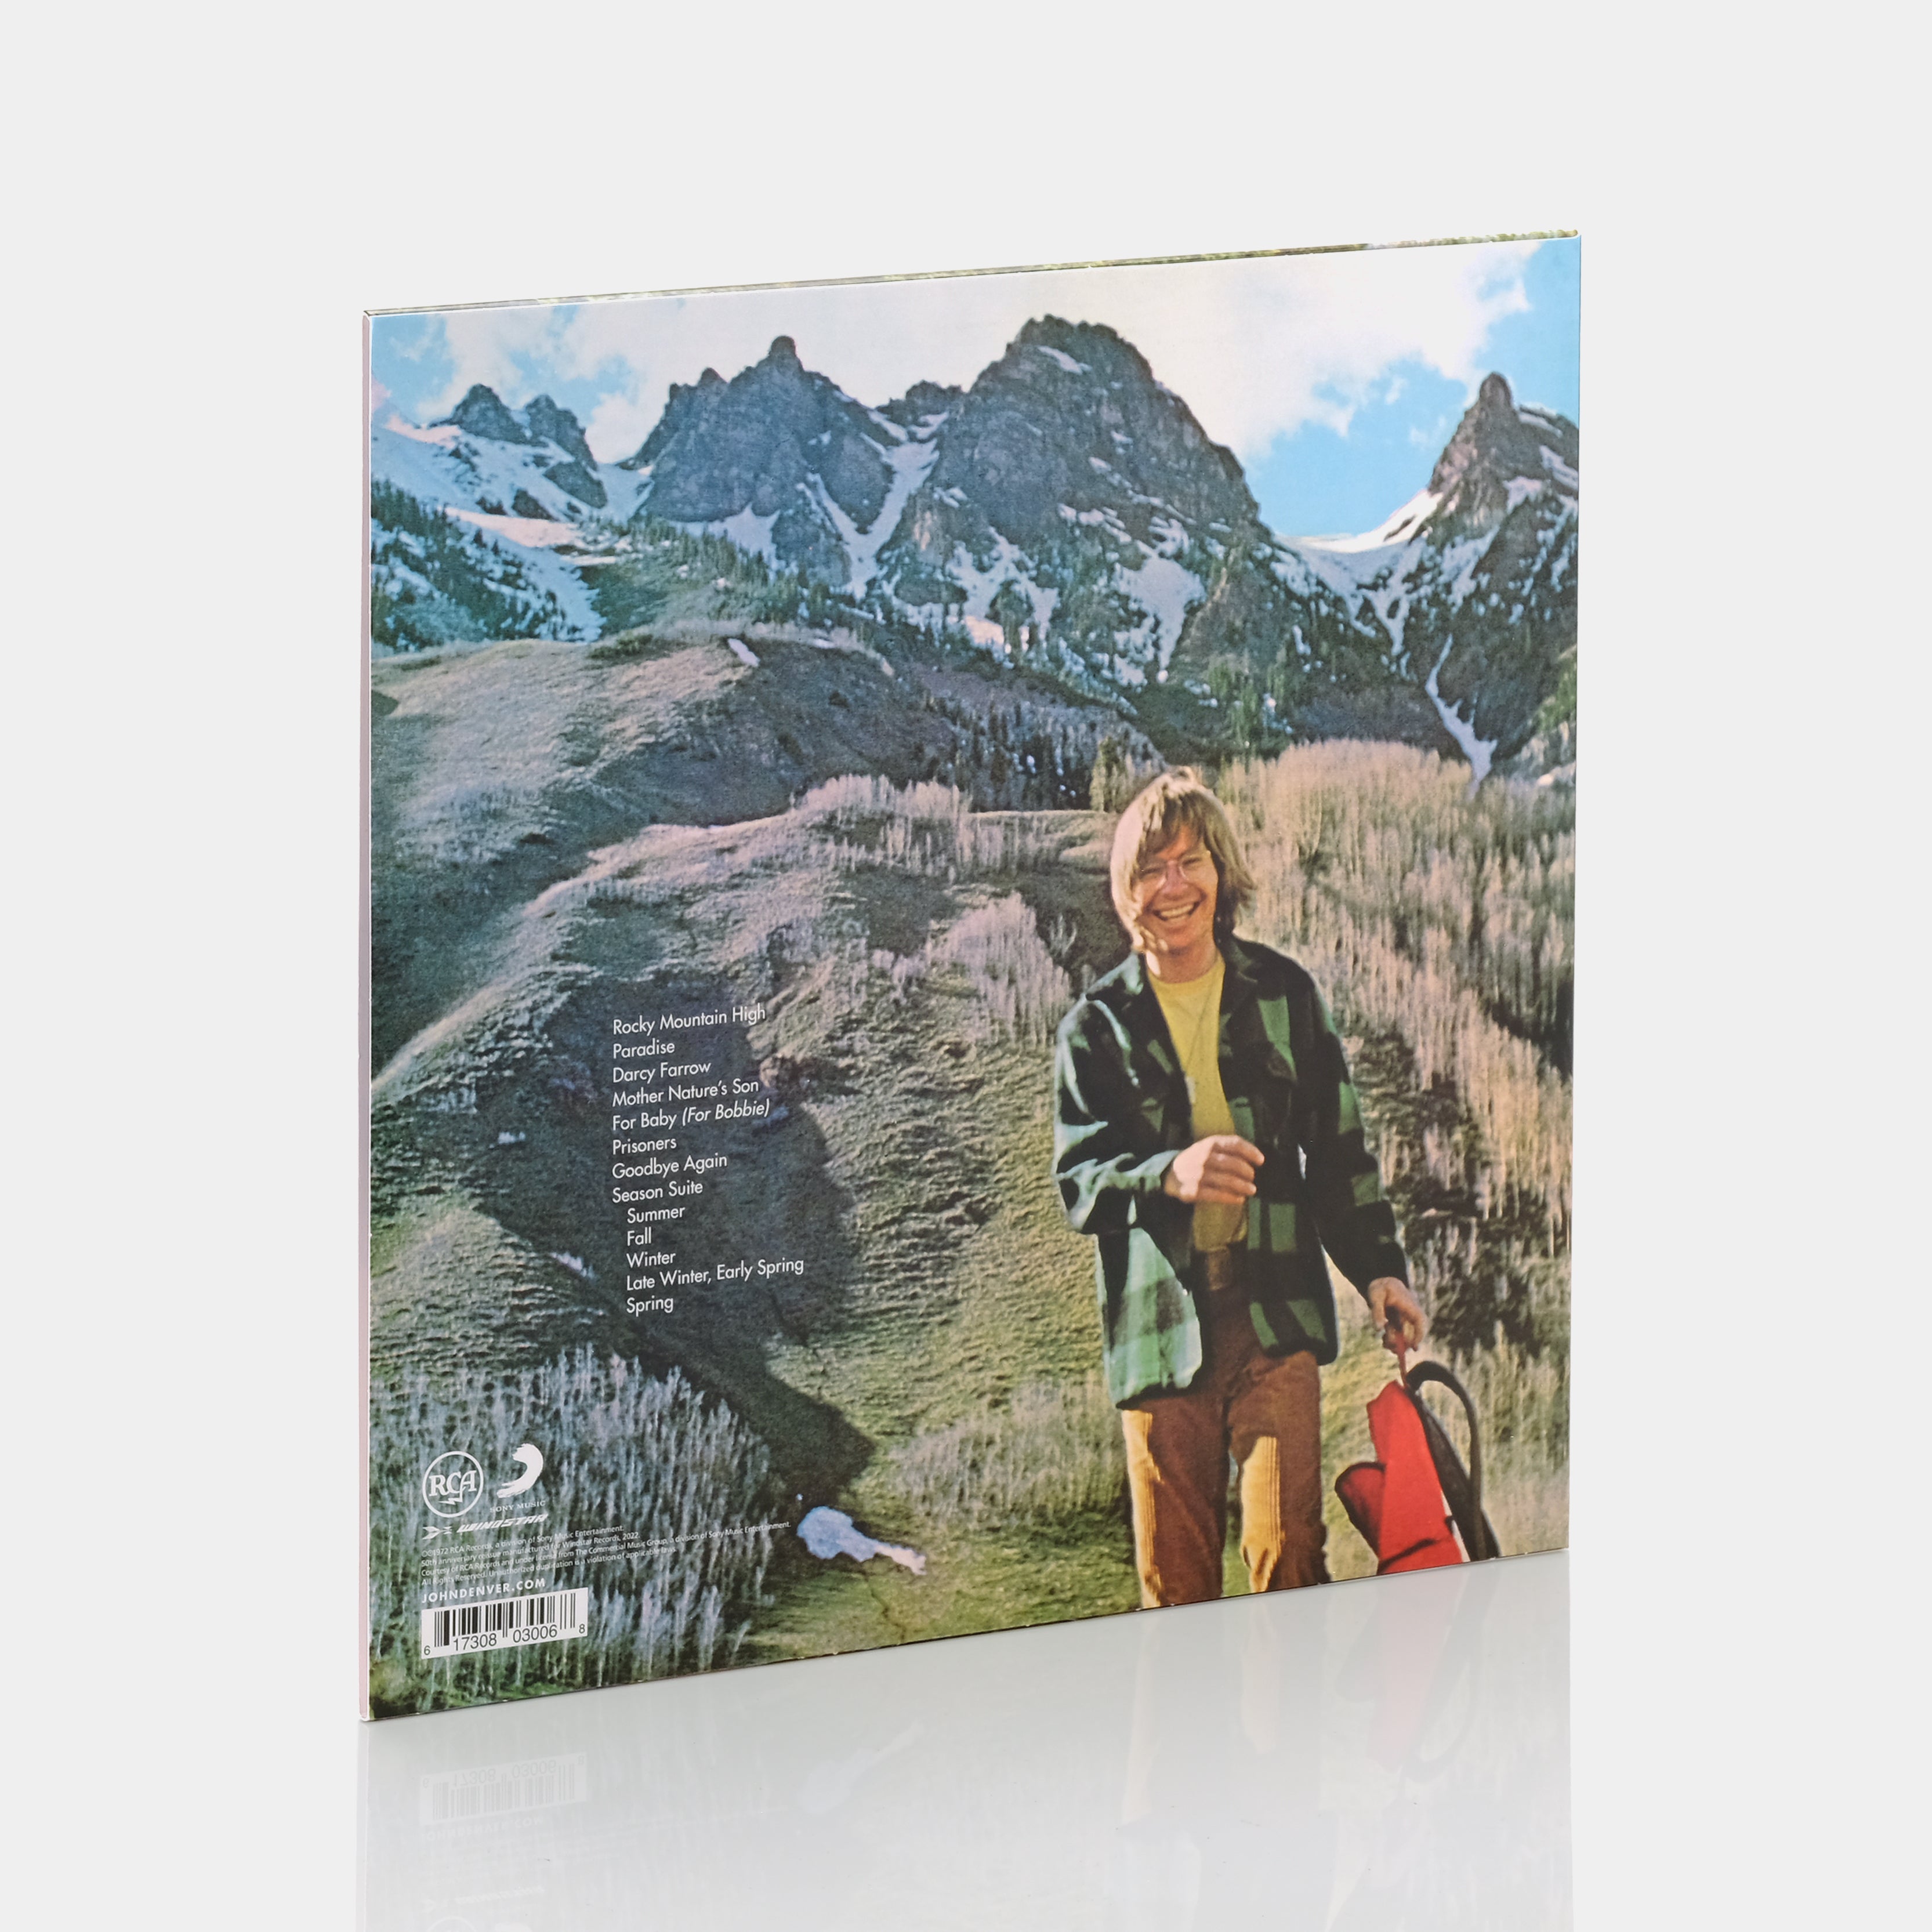 John Denver - Rocky Mountain High 50th Anniversary Edition LP Transparent Blue Vinyl Record